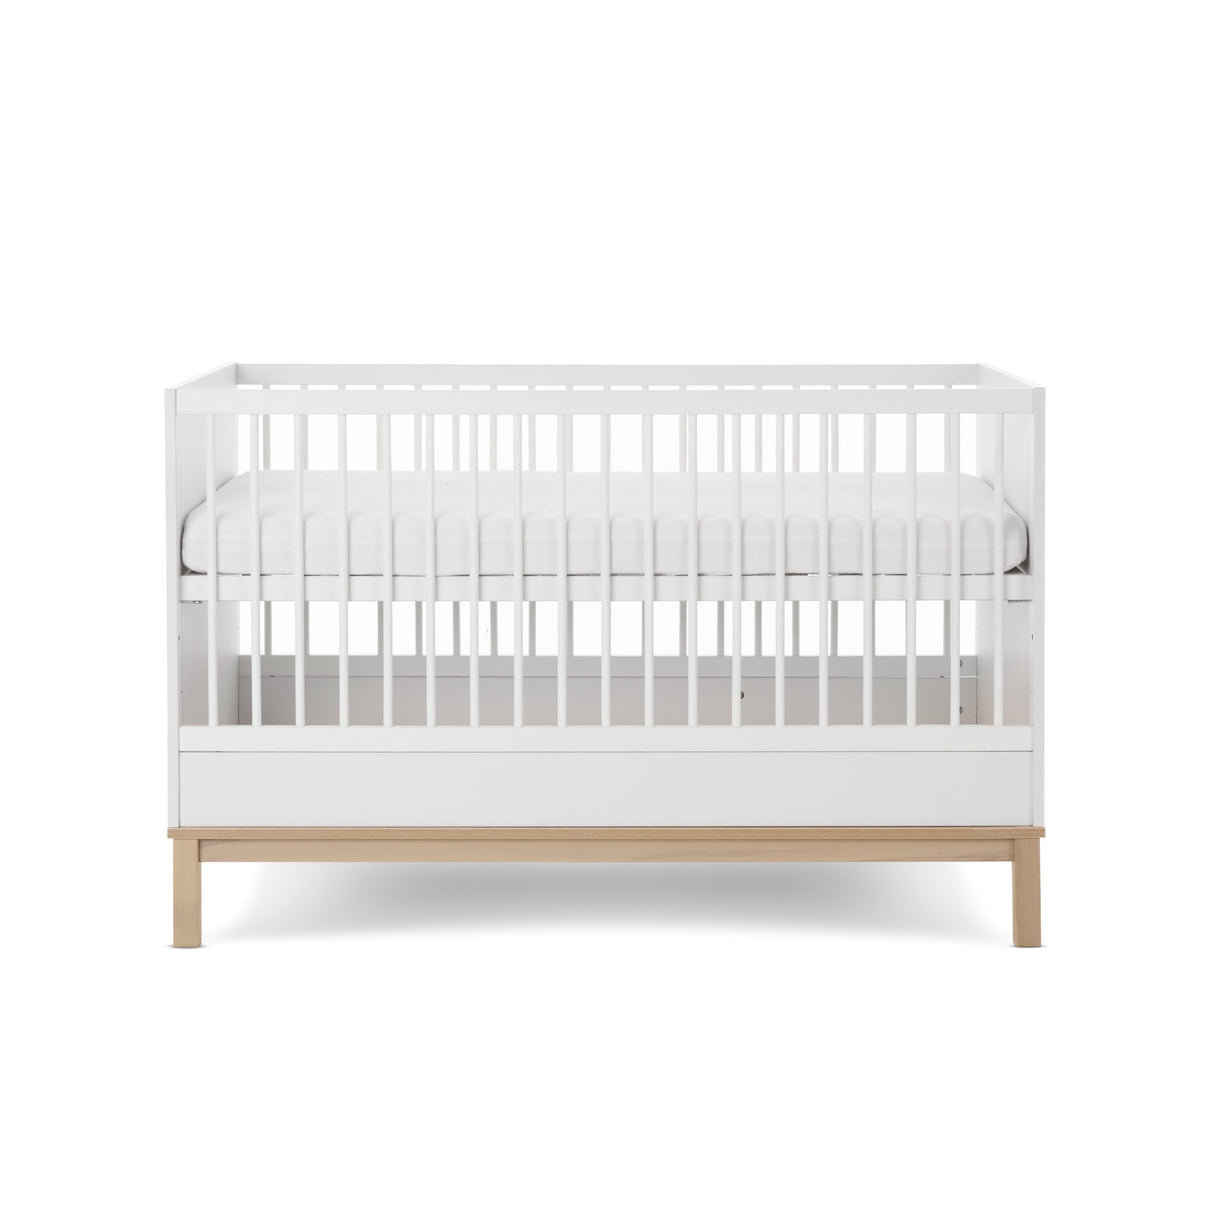 Astrid 3 Piece Nursery Room Set - White